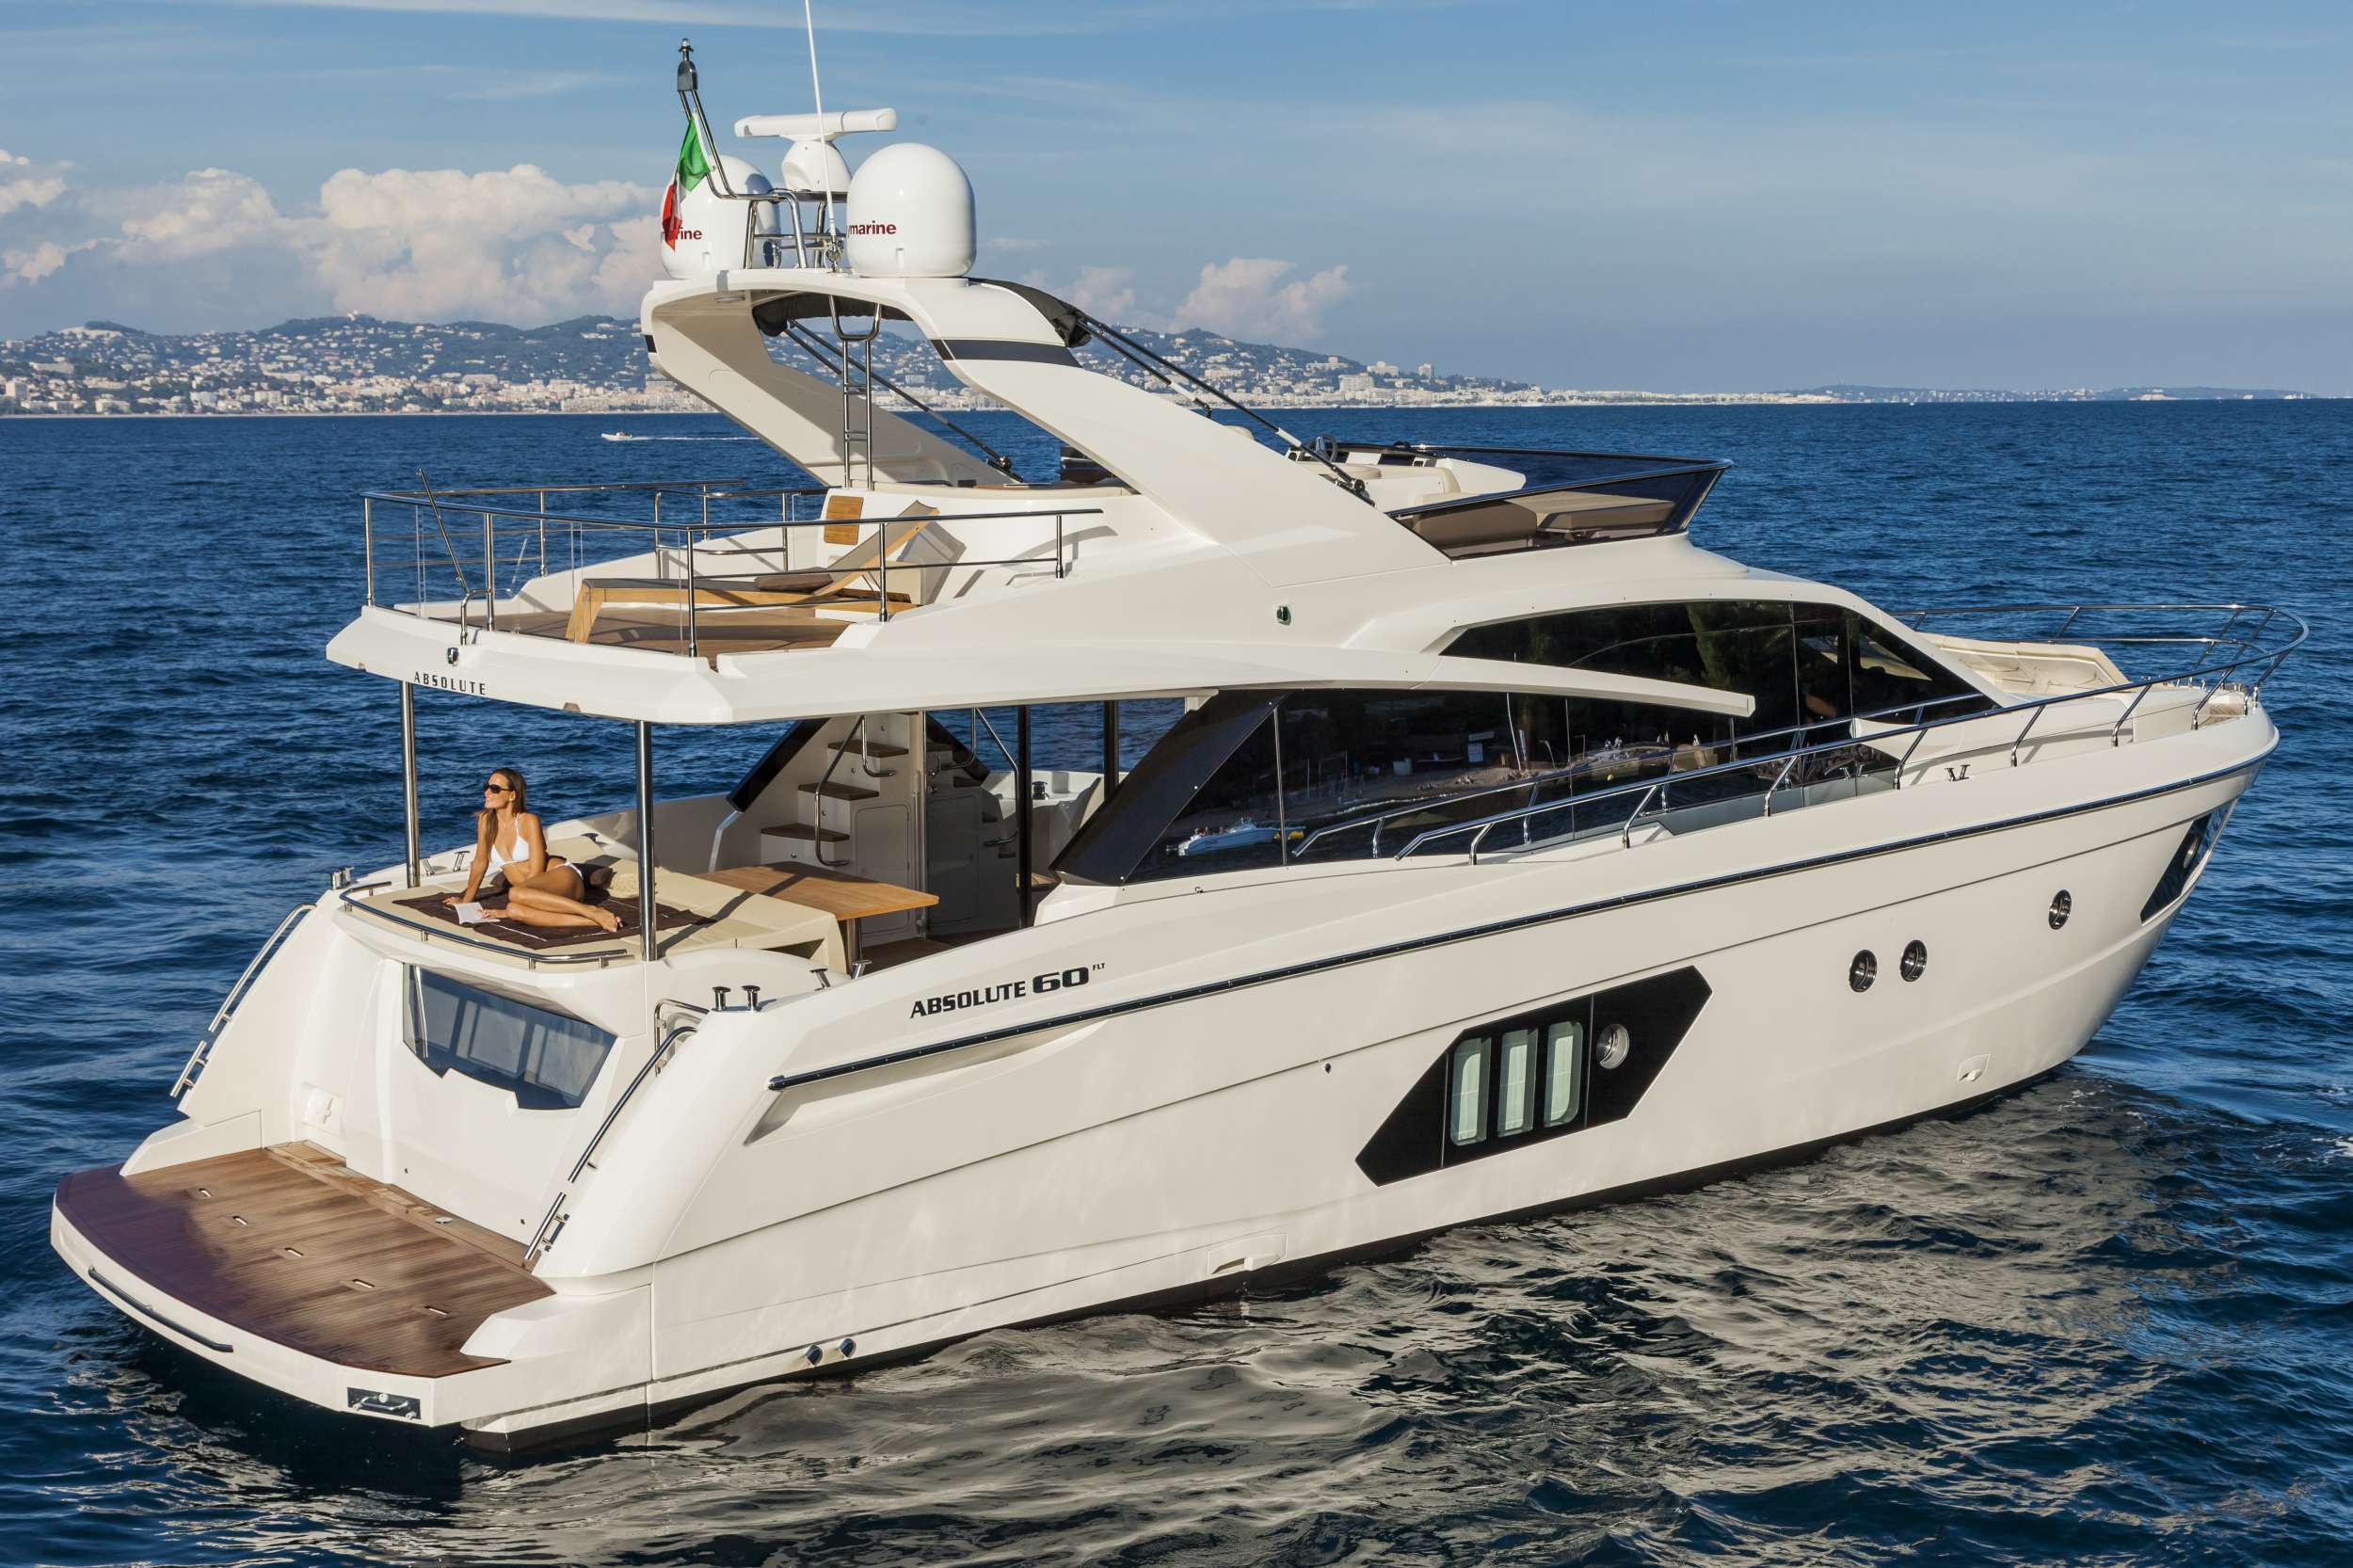 ABSOLUTE - Yacht Charter Monaco & Boat hire in Fr. Riviera, Corsica & Sardinia 1